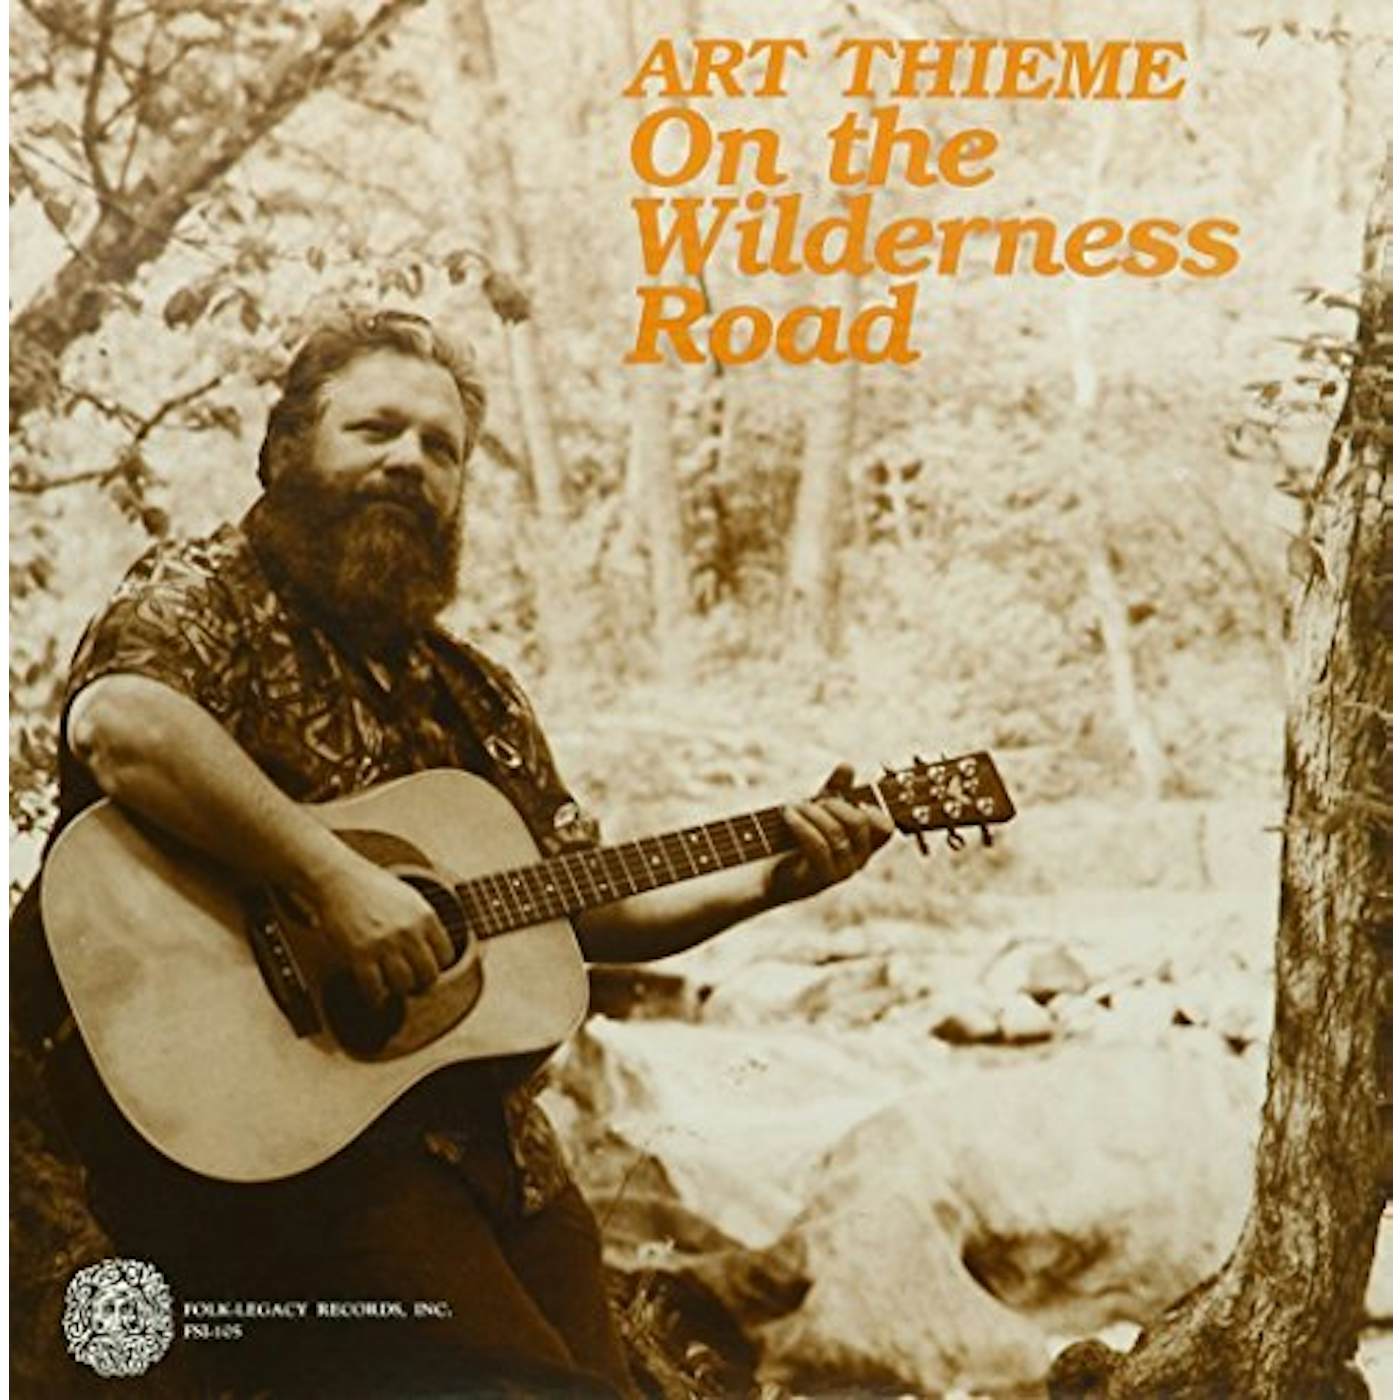 Art Thieme On the Wilderness Road Vinyl Record